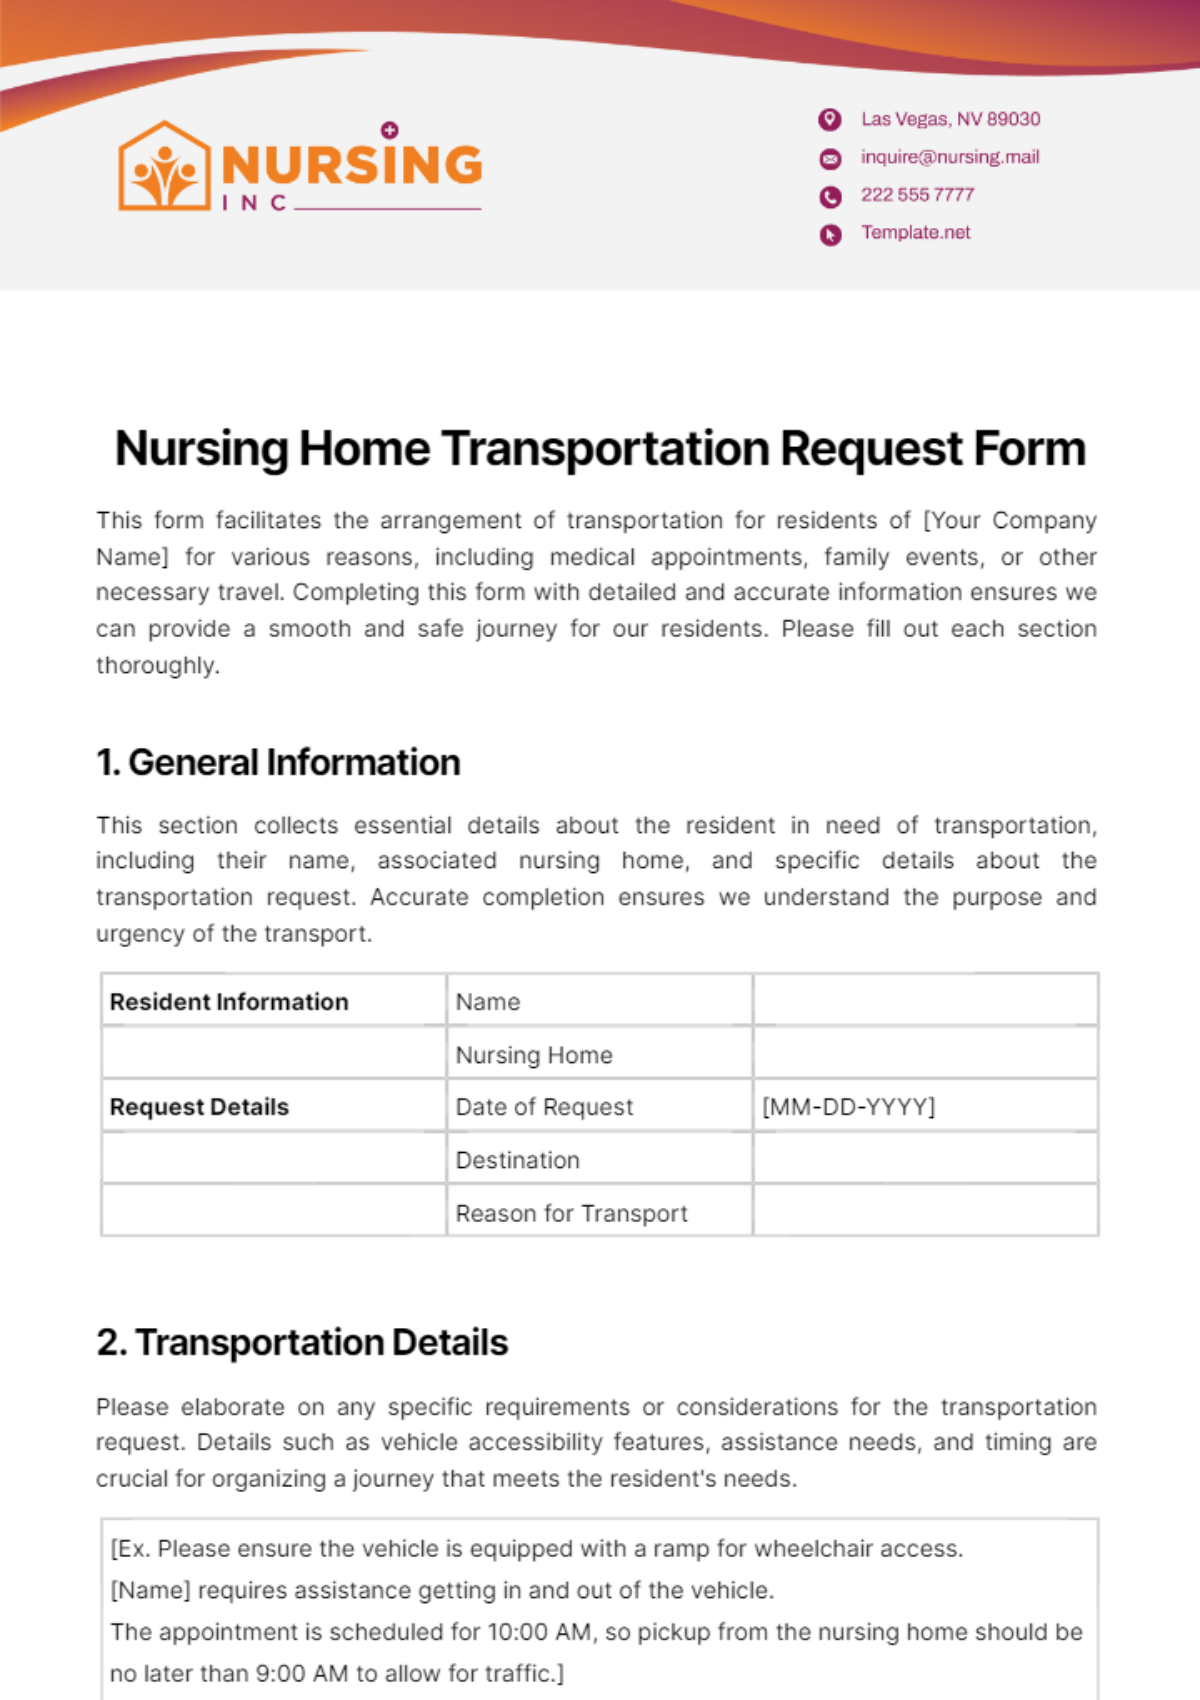 Nursing Home Transportation Request Form Template